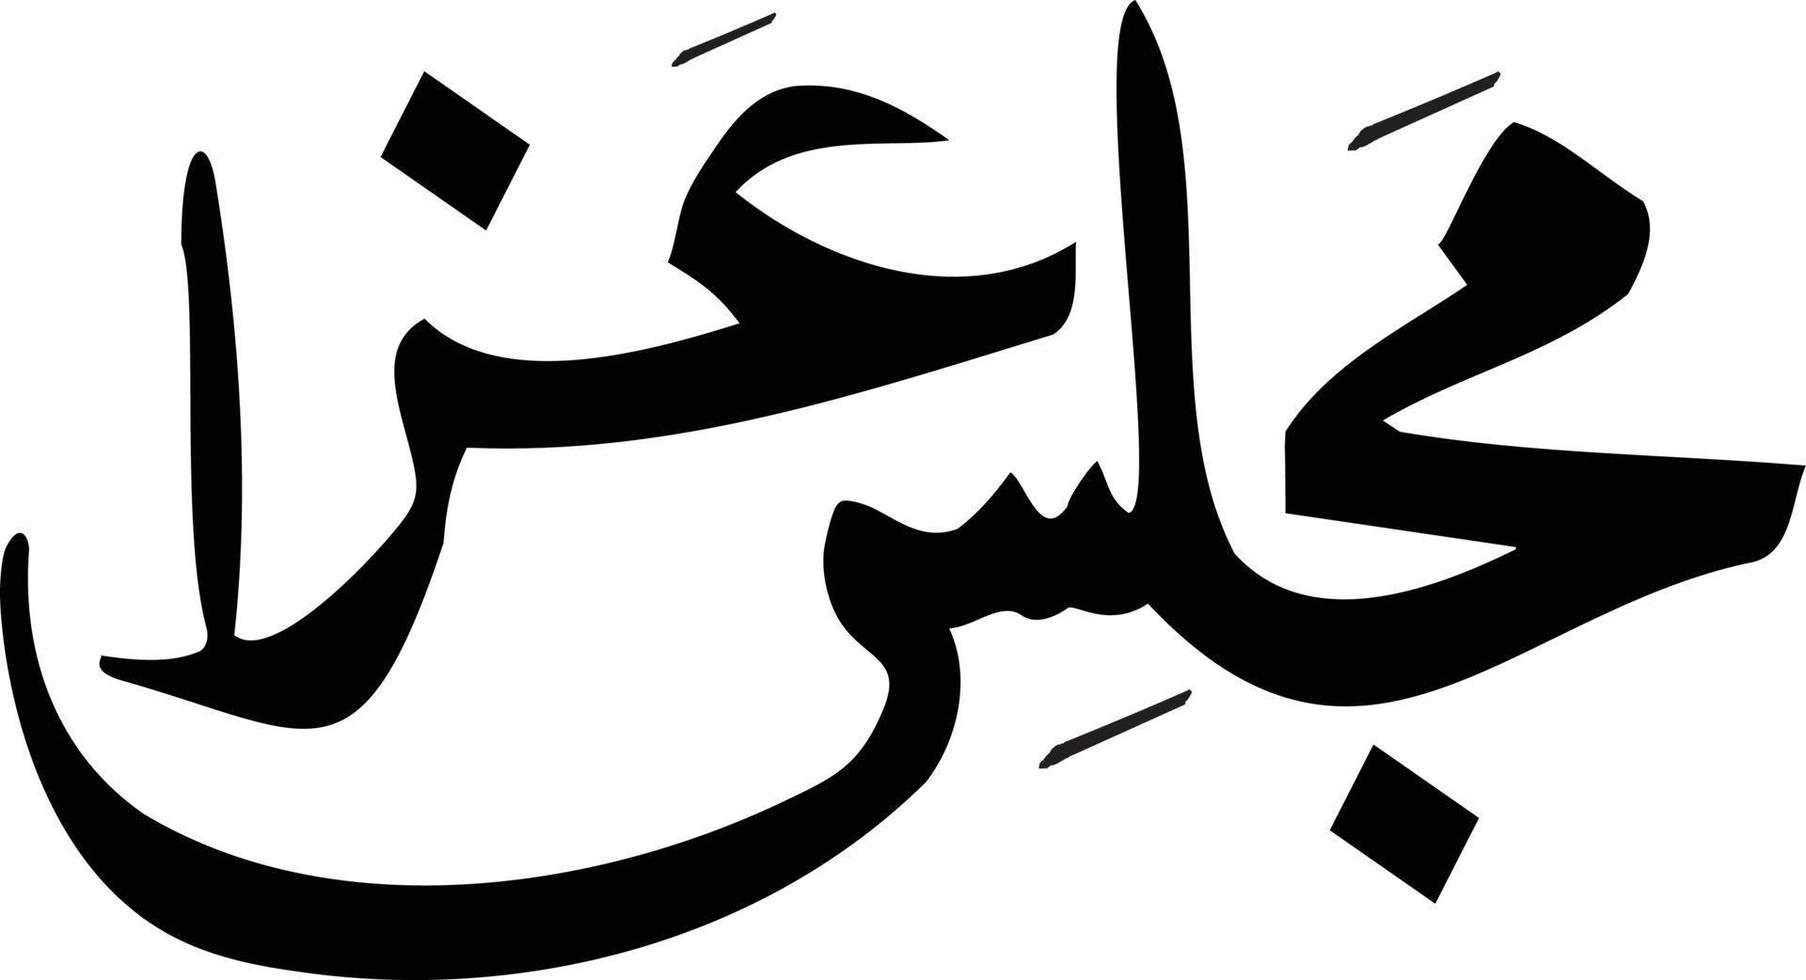 vector libre de caligrafía islámica mijles aza